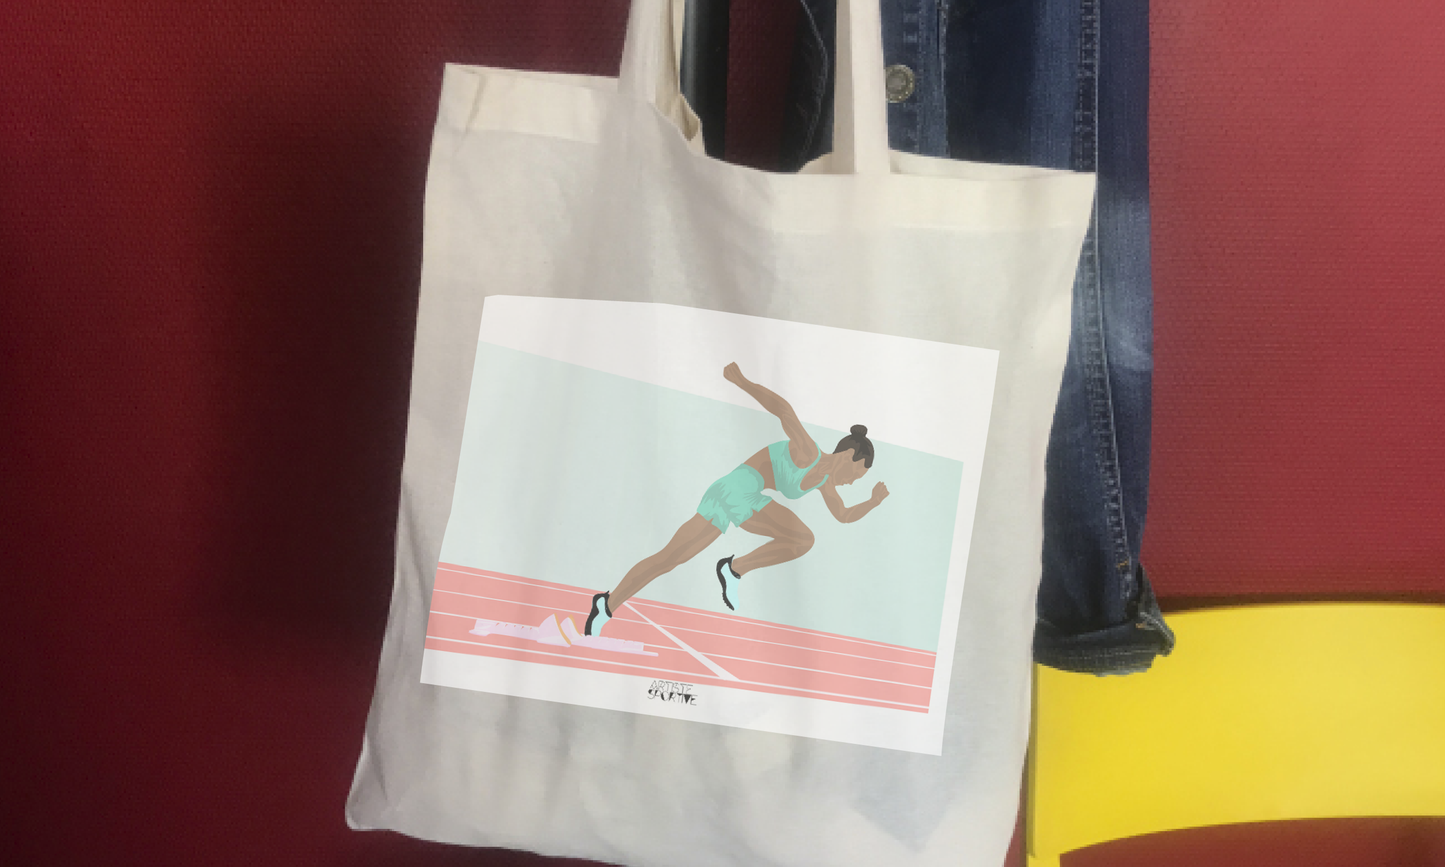 Tote bag or athletic bag "women's sprint"